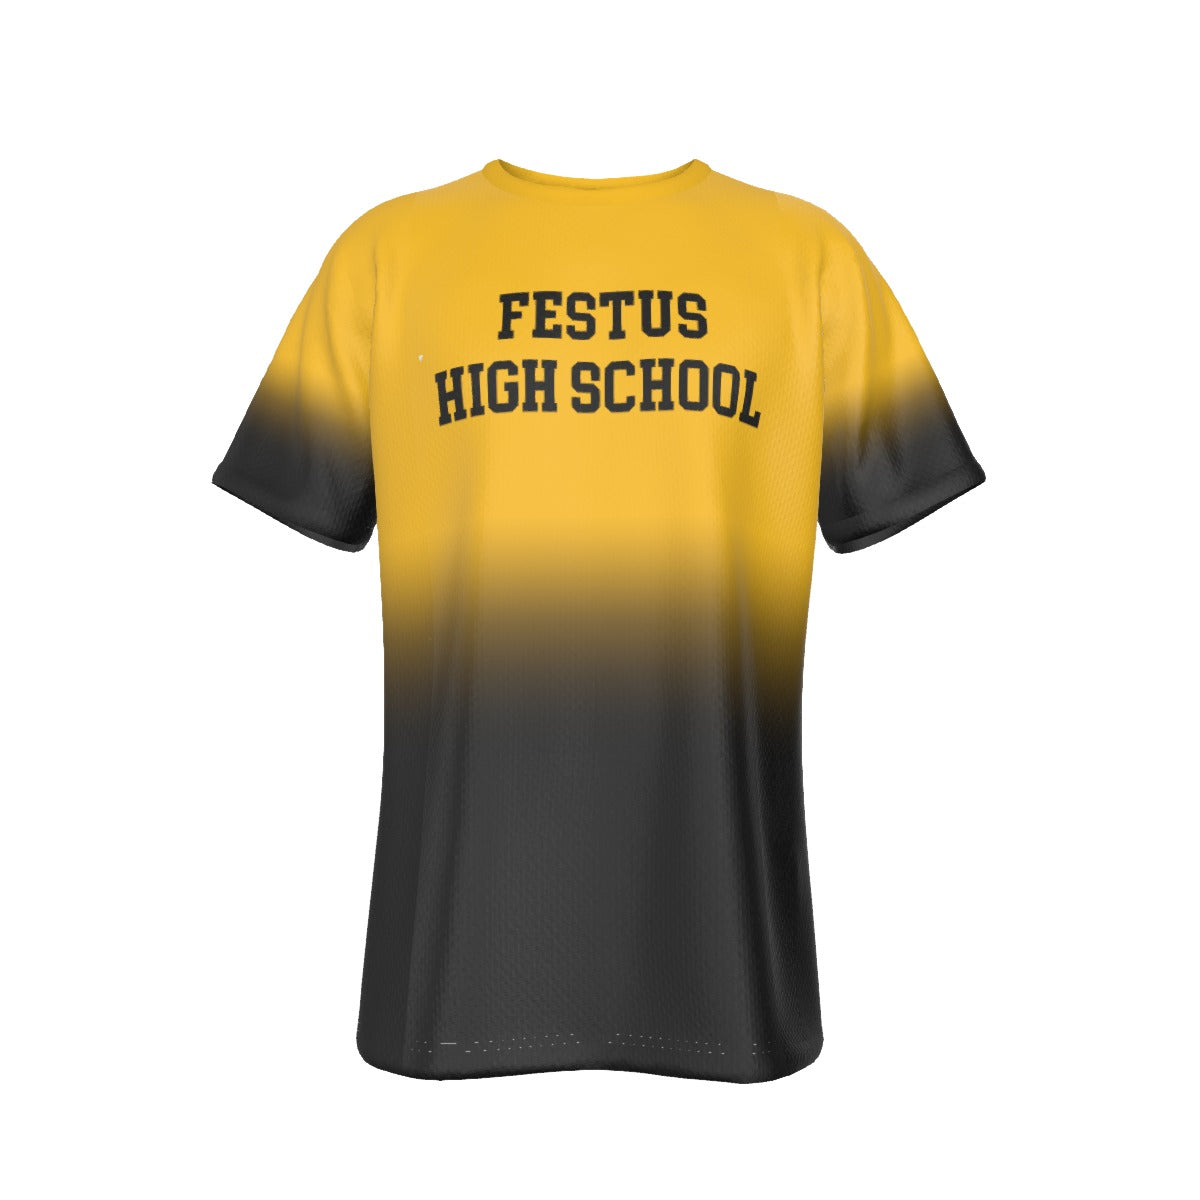 Festus High School